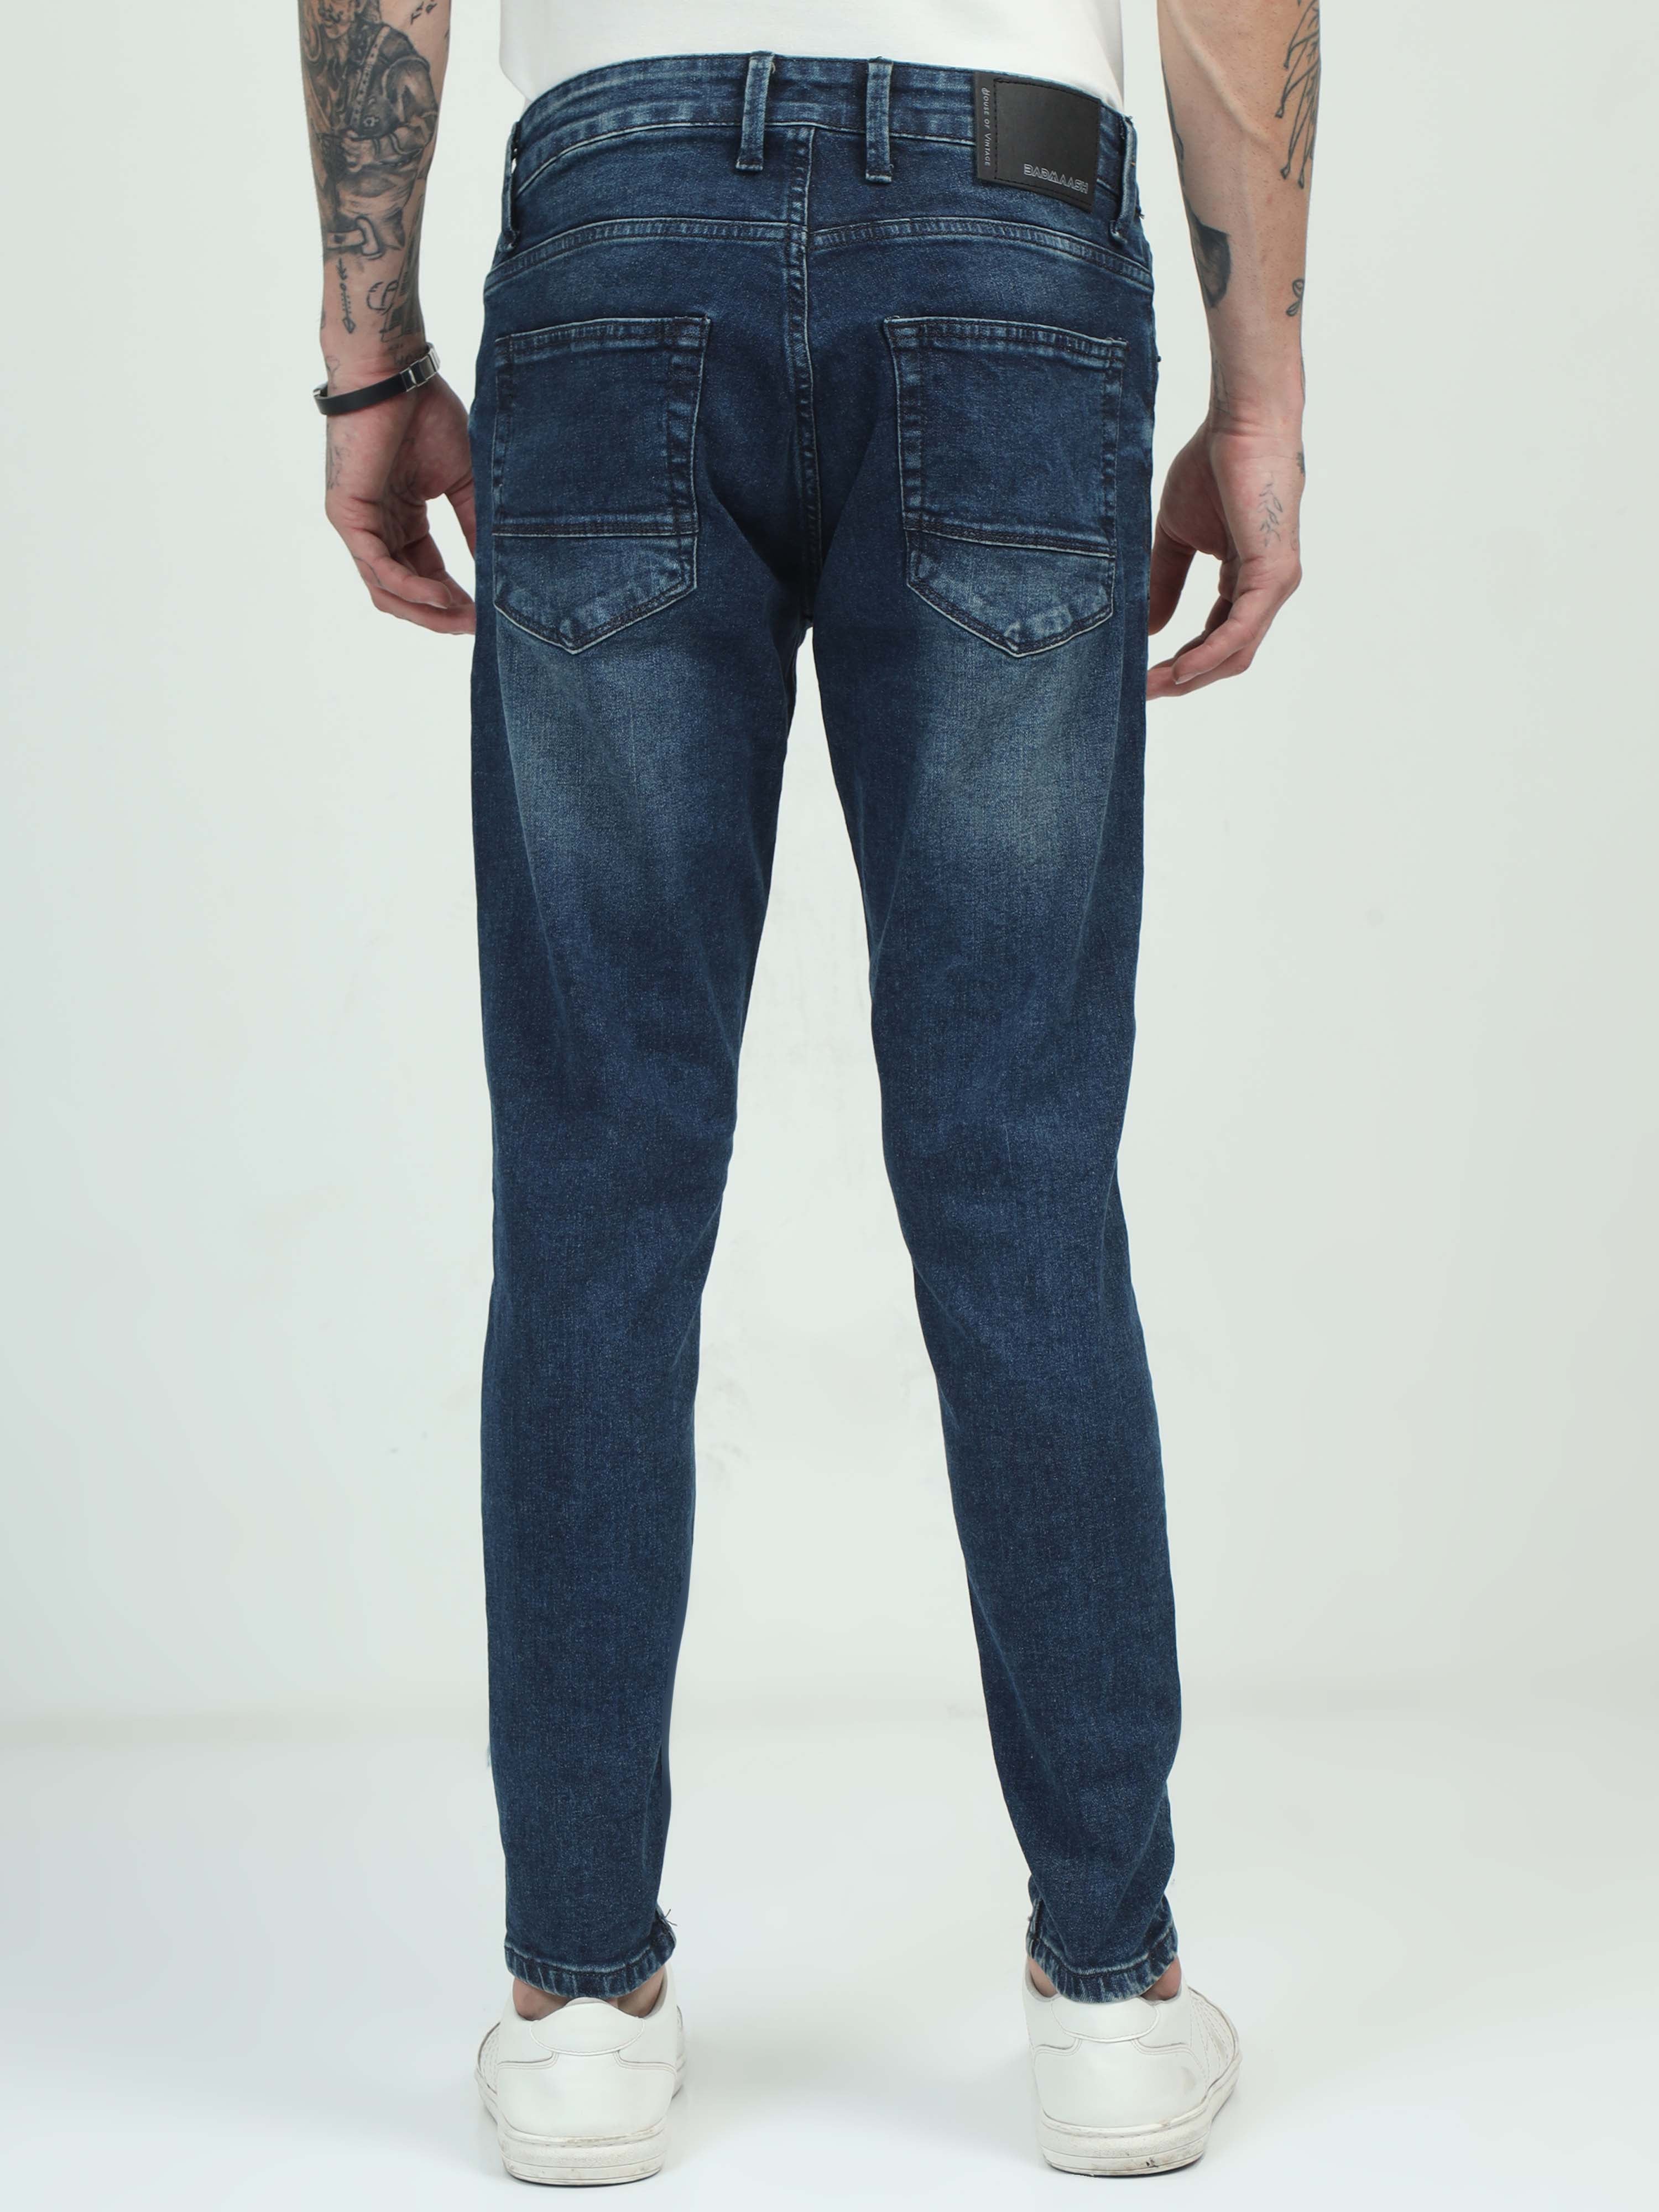 Cerulean Blue Skinny Jeans